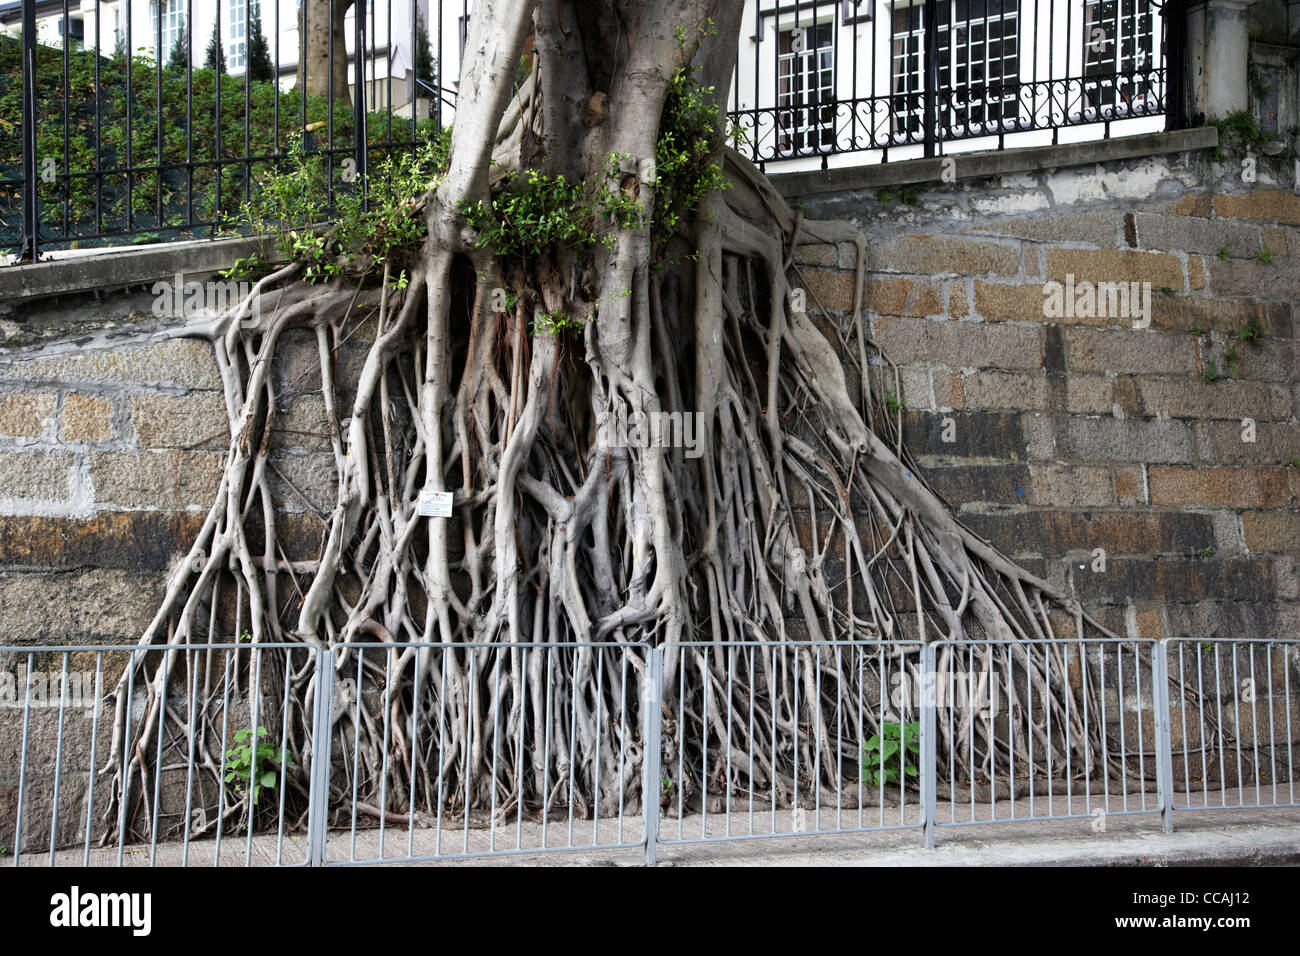 Il cinese banyan tree radici crescente verso il basso una parete di hong kong RAS di Hong kong cina asia Foto Stock